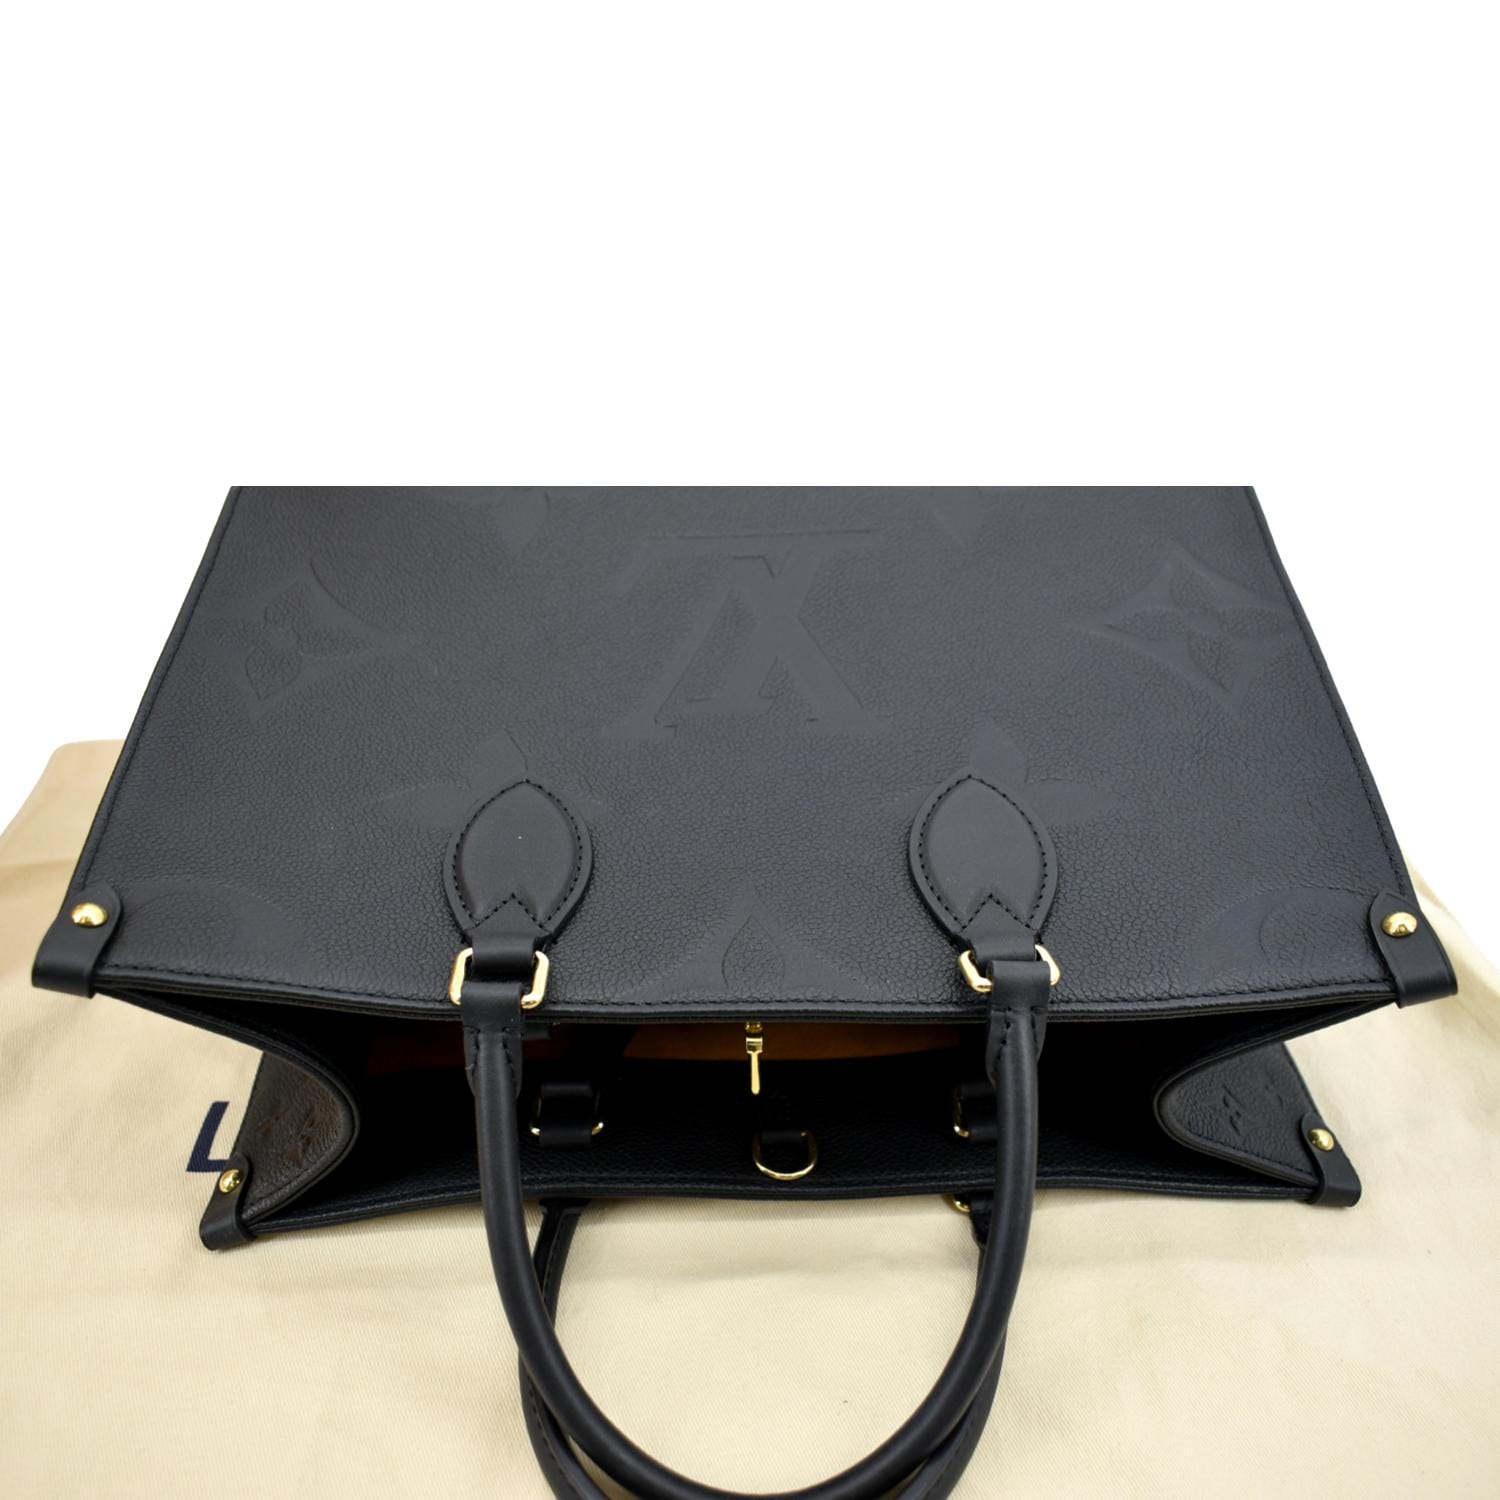 Replica Louis Vuitton Women's Monogram Empreinte Bags for Sale